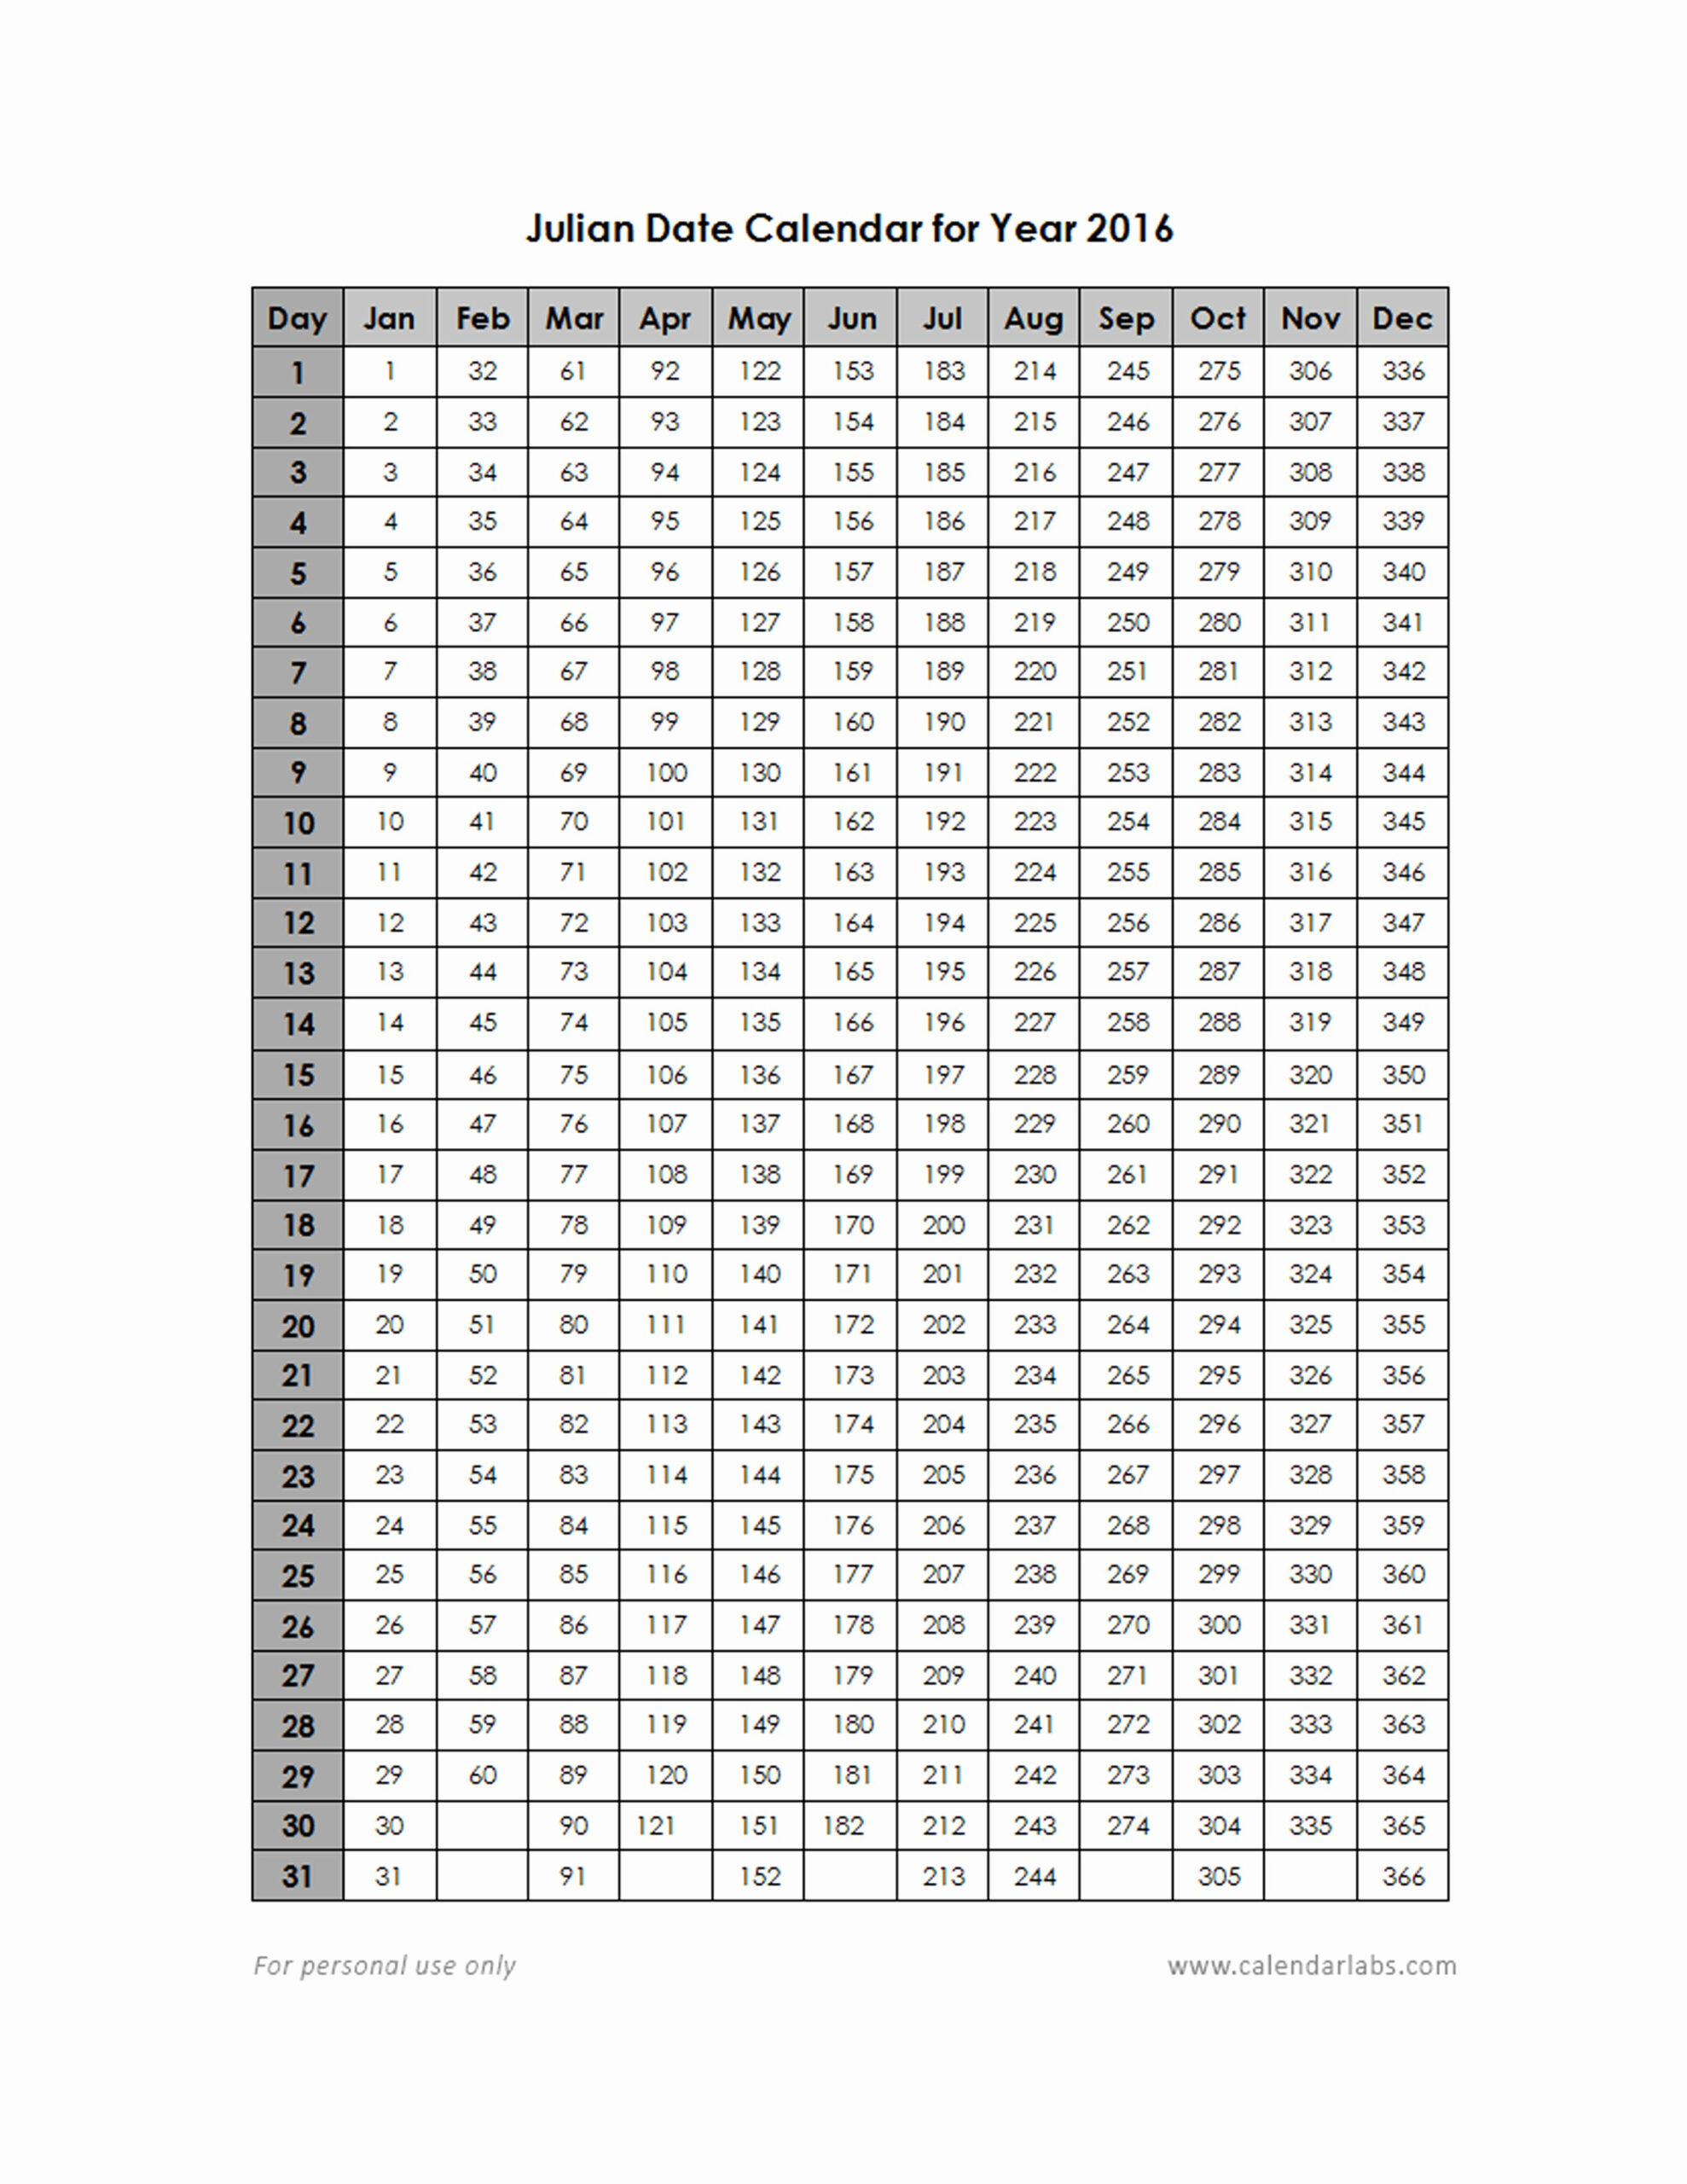 Julian Date Calendar Perpetual | Calendar For Planning for Perpetual Julian Date Calendar With Leap Year